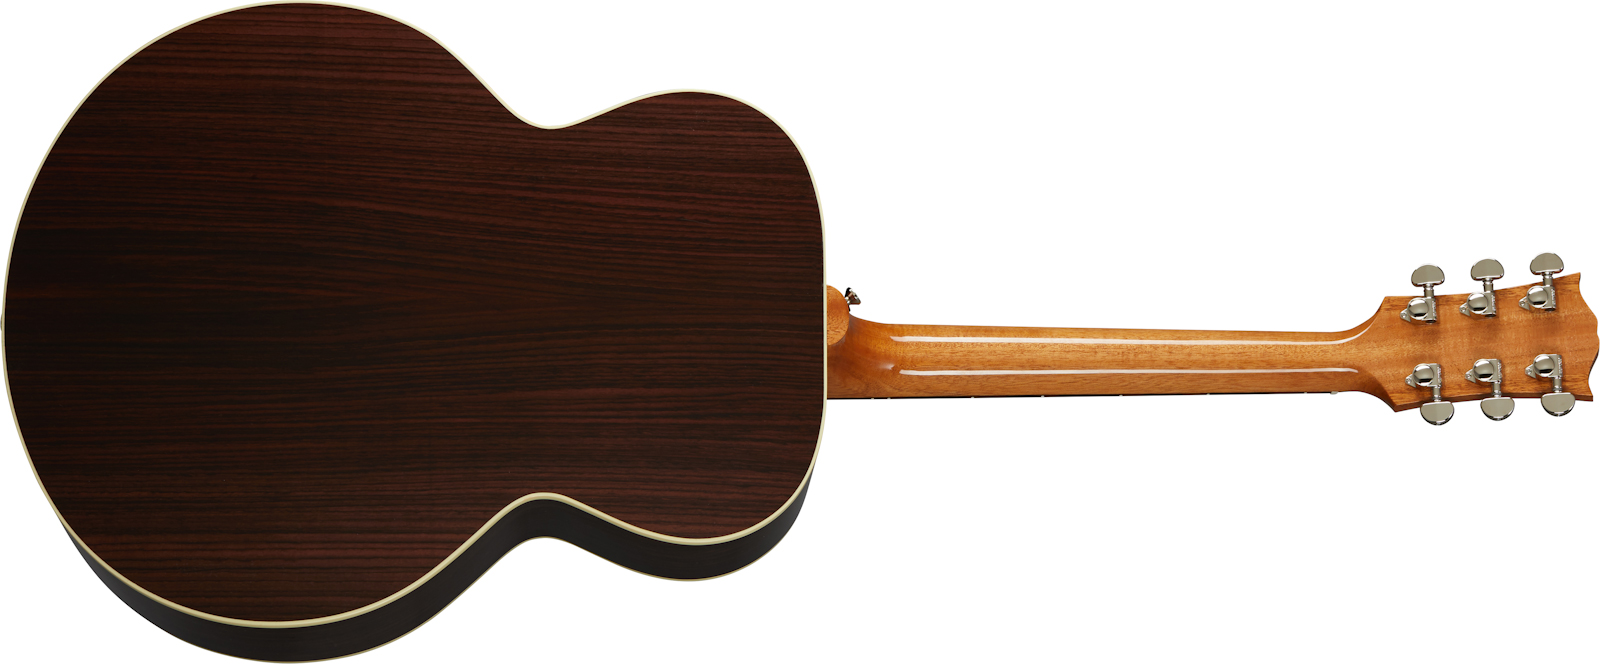 Gibson Sj-200 Studio Rosewood 2020 Super Jumbo Epicea Palissandre Rw - Antique Natural - Elektroakustische Gitarre - Variation 1